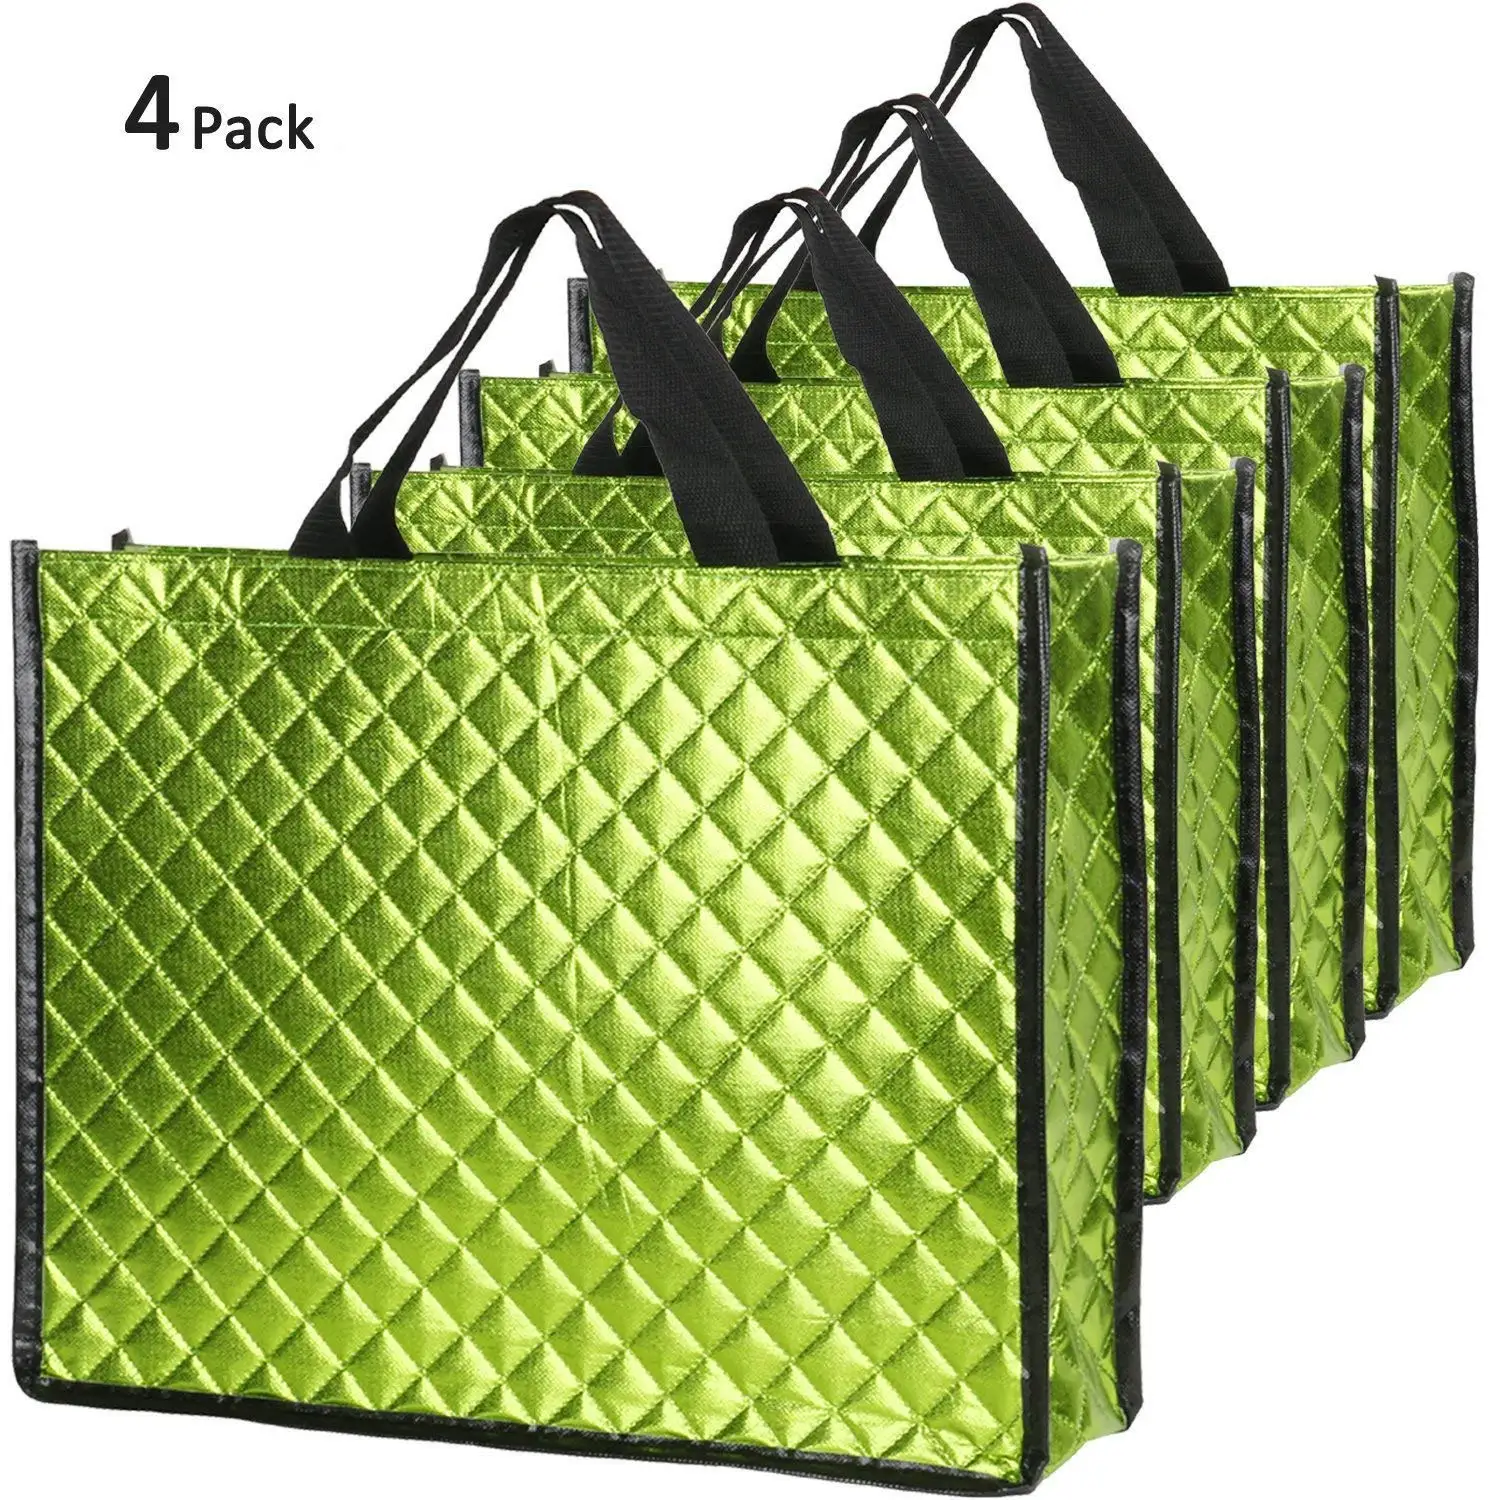 reusable fabric gift bag. Medium drawstring green gift bag